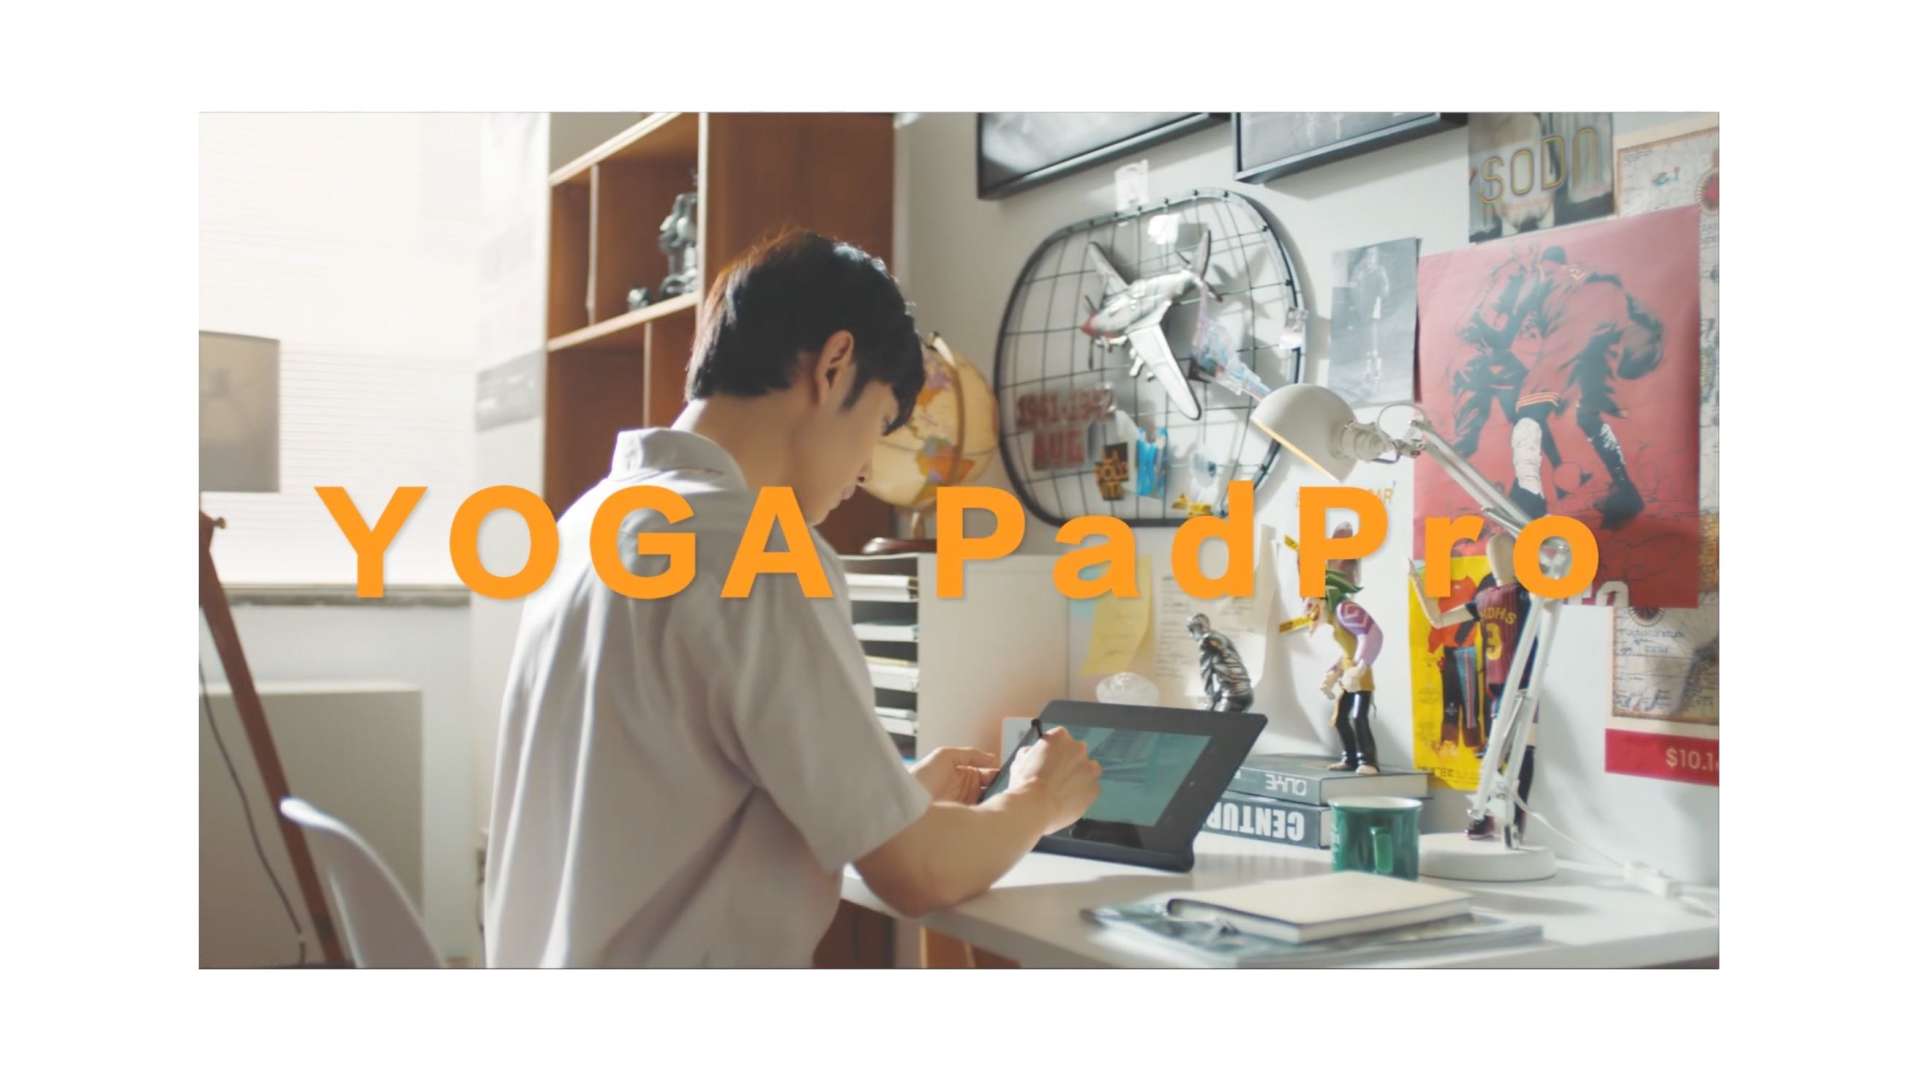 联想YOGA PadPro平板电脑